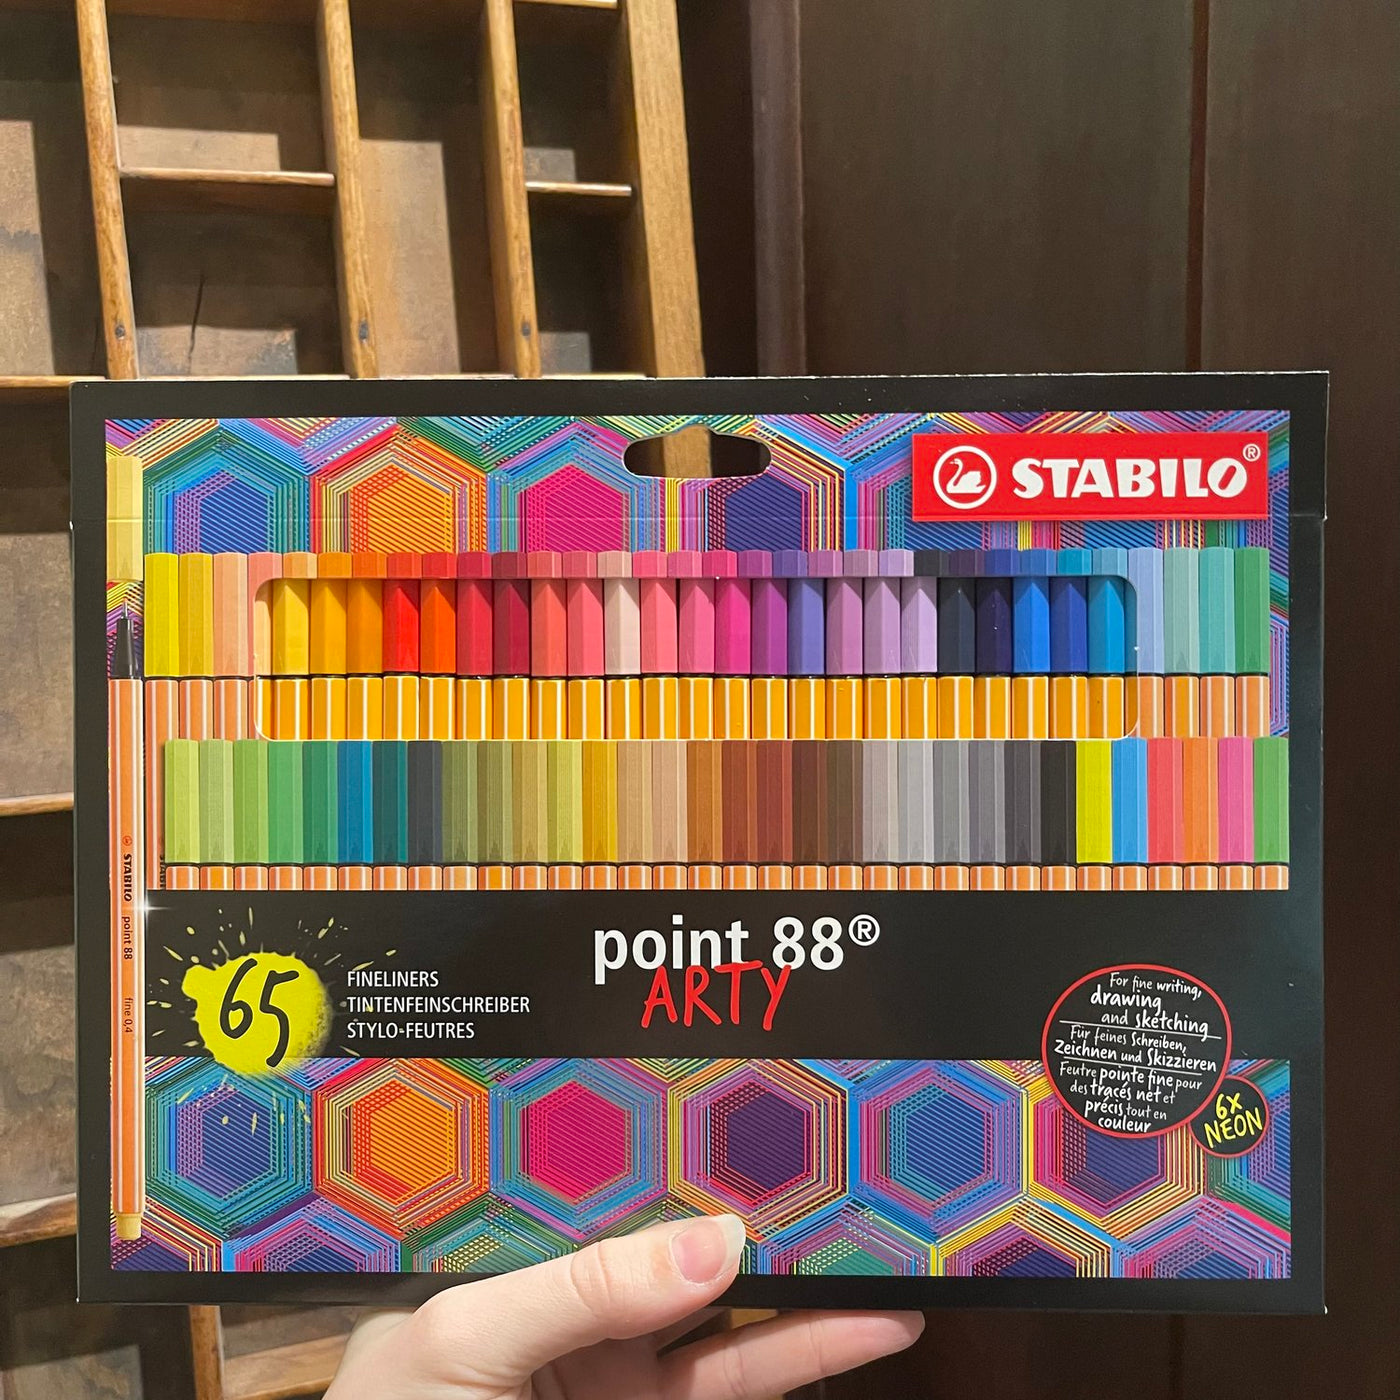 Stabilo Point 88 Master Set - 65 Pack